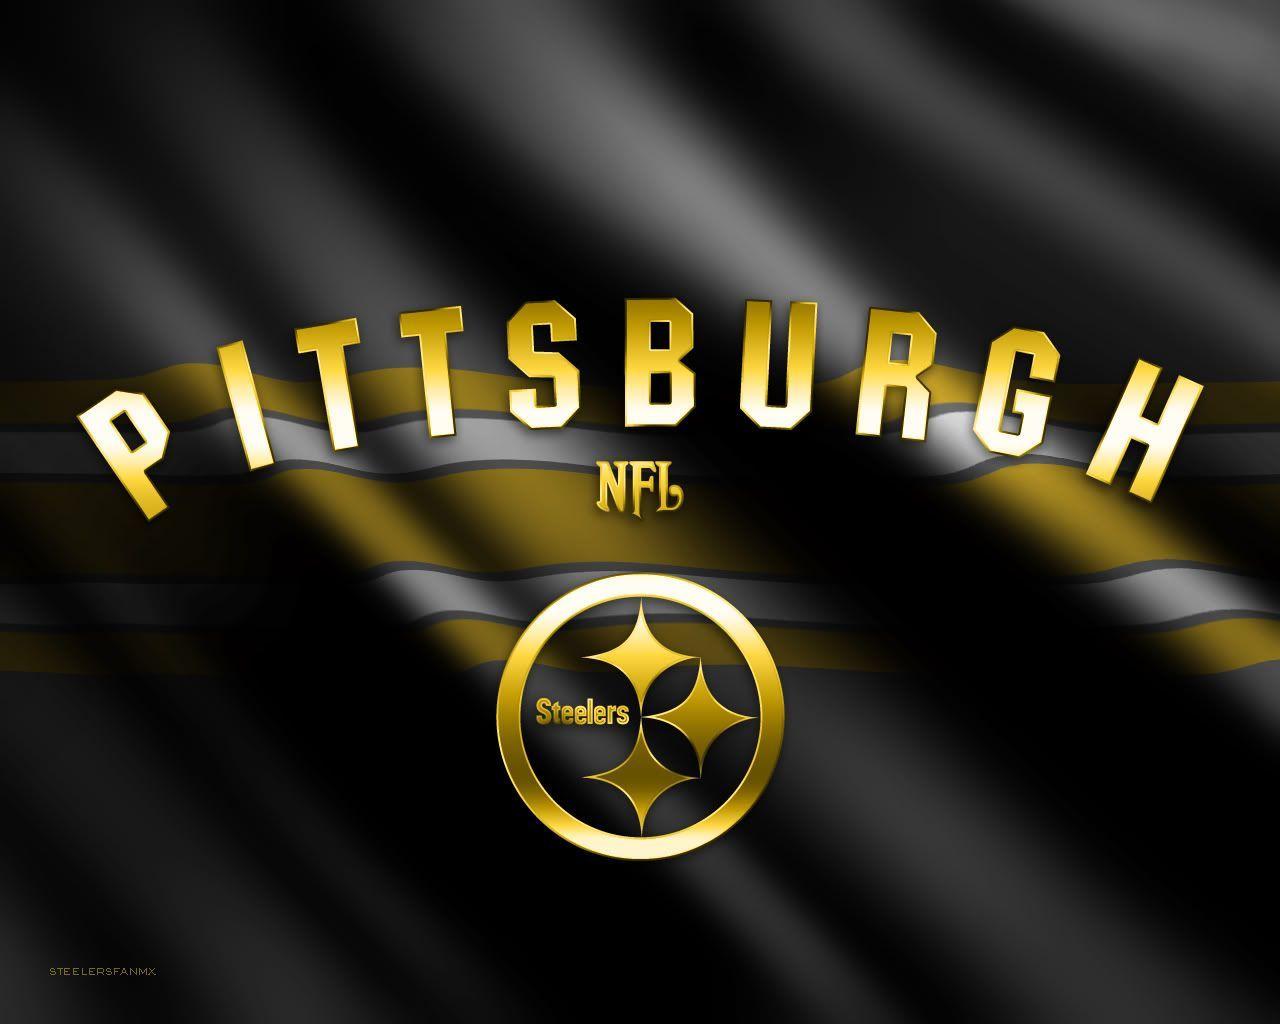 HD Wallpaper Pittsburgh Steeler NFL Team Flag. Download High